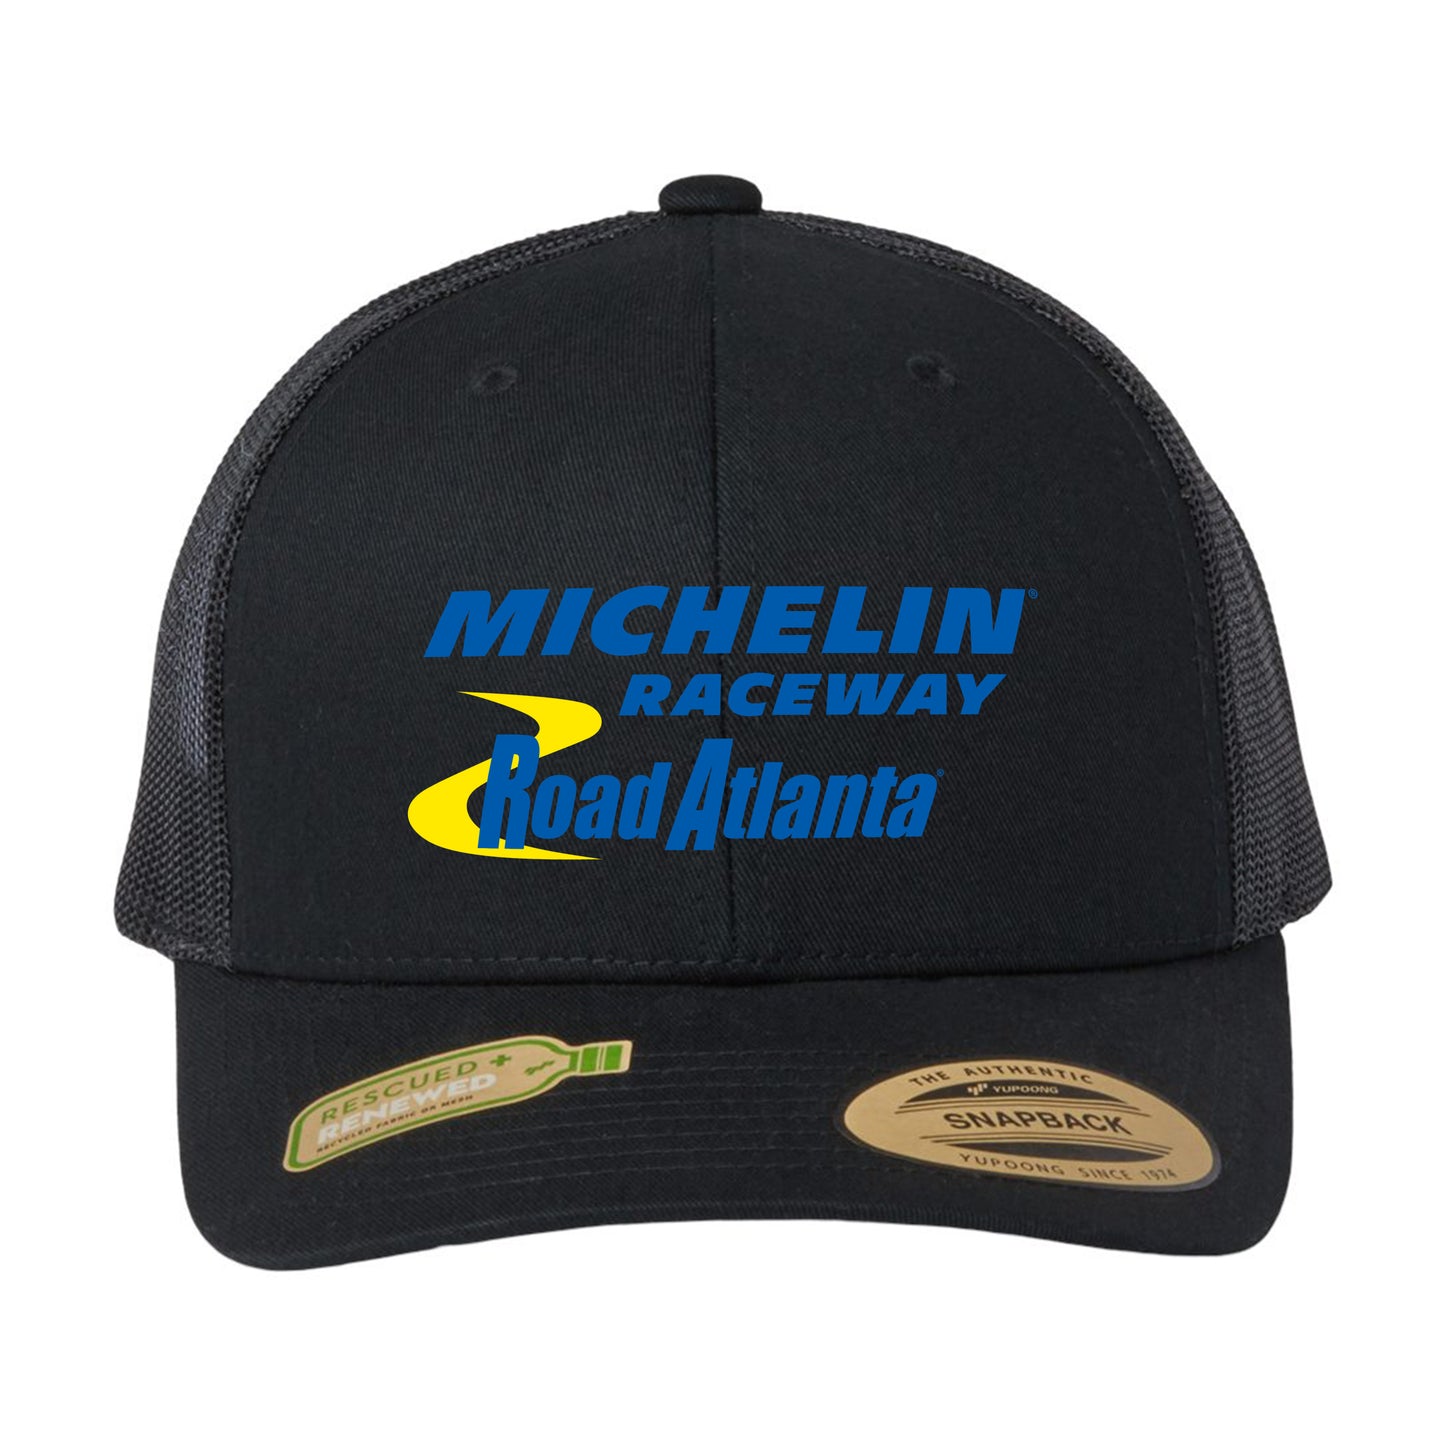 Michelin Raceway Road Atlanta Snapback Cap - Black